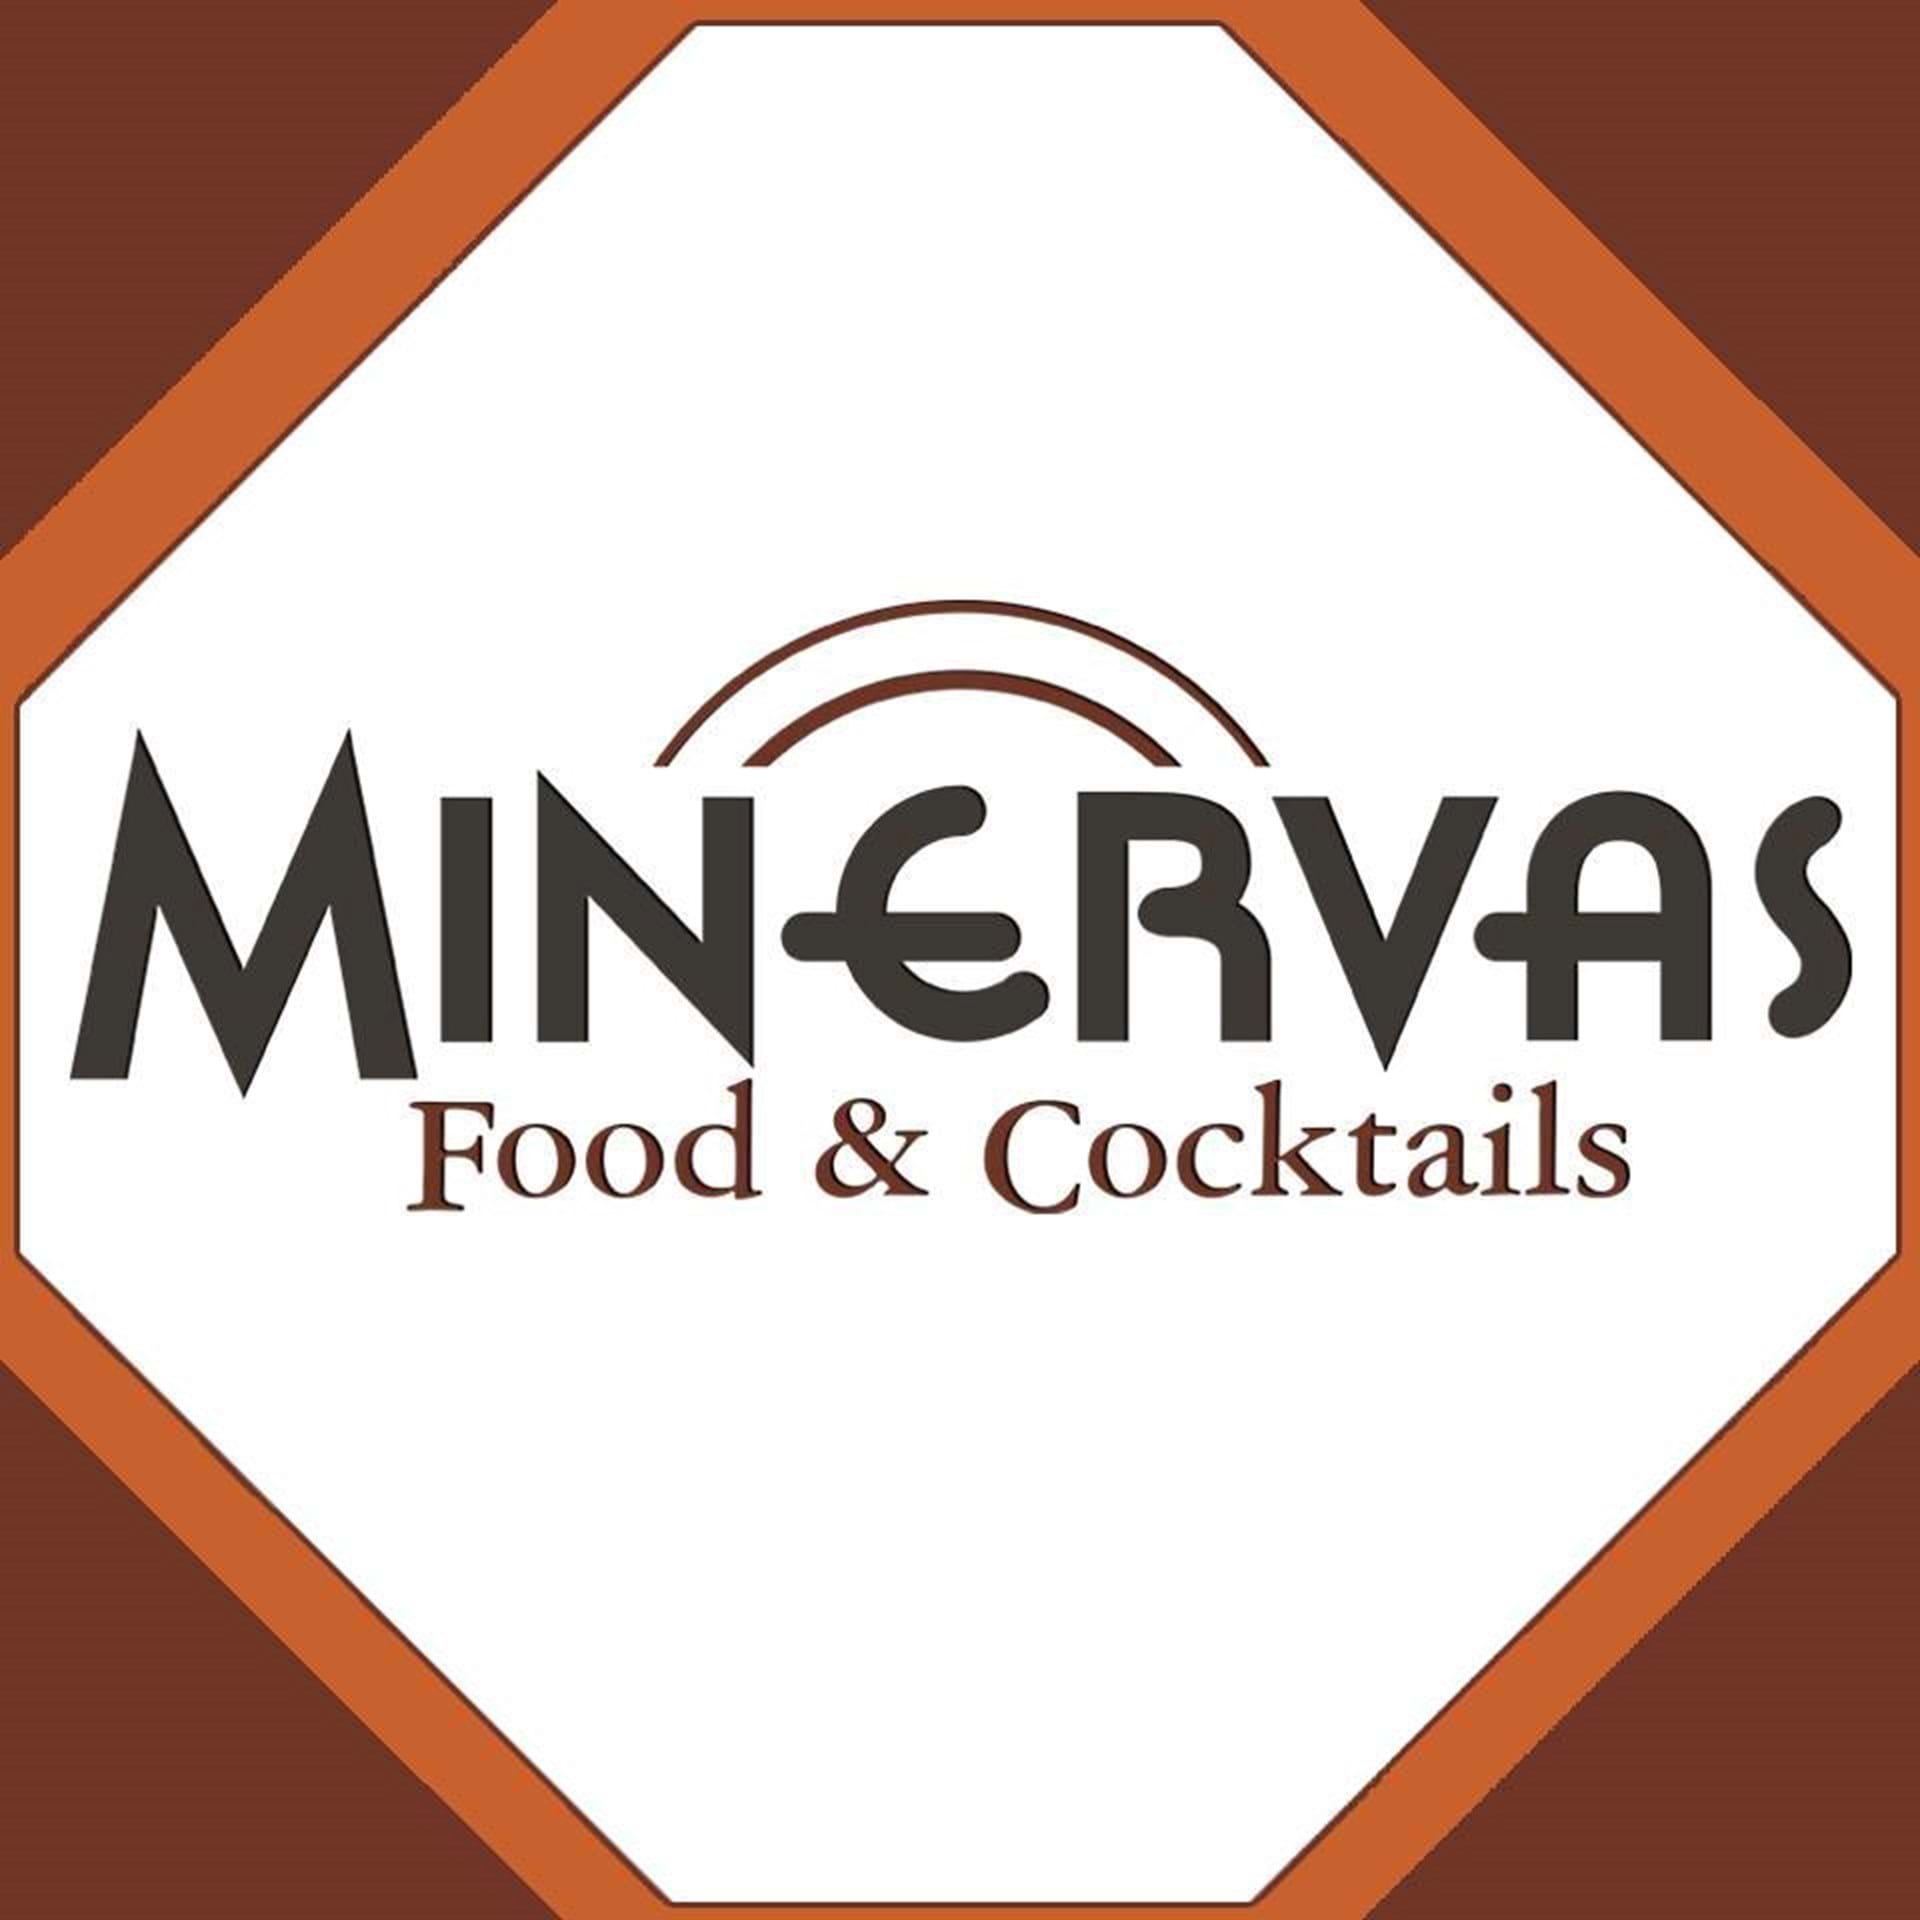 Minervas Food & Cocktails